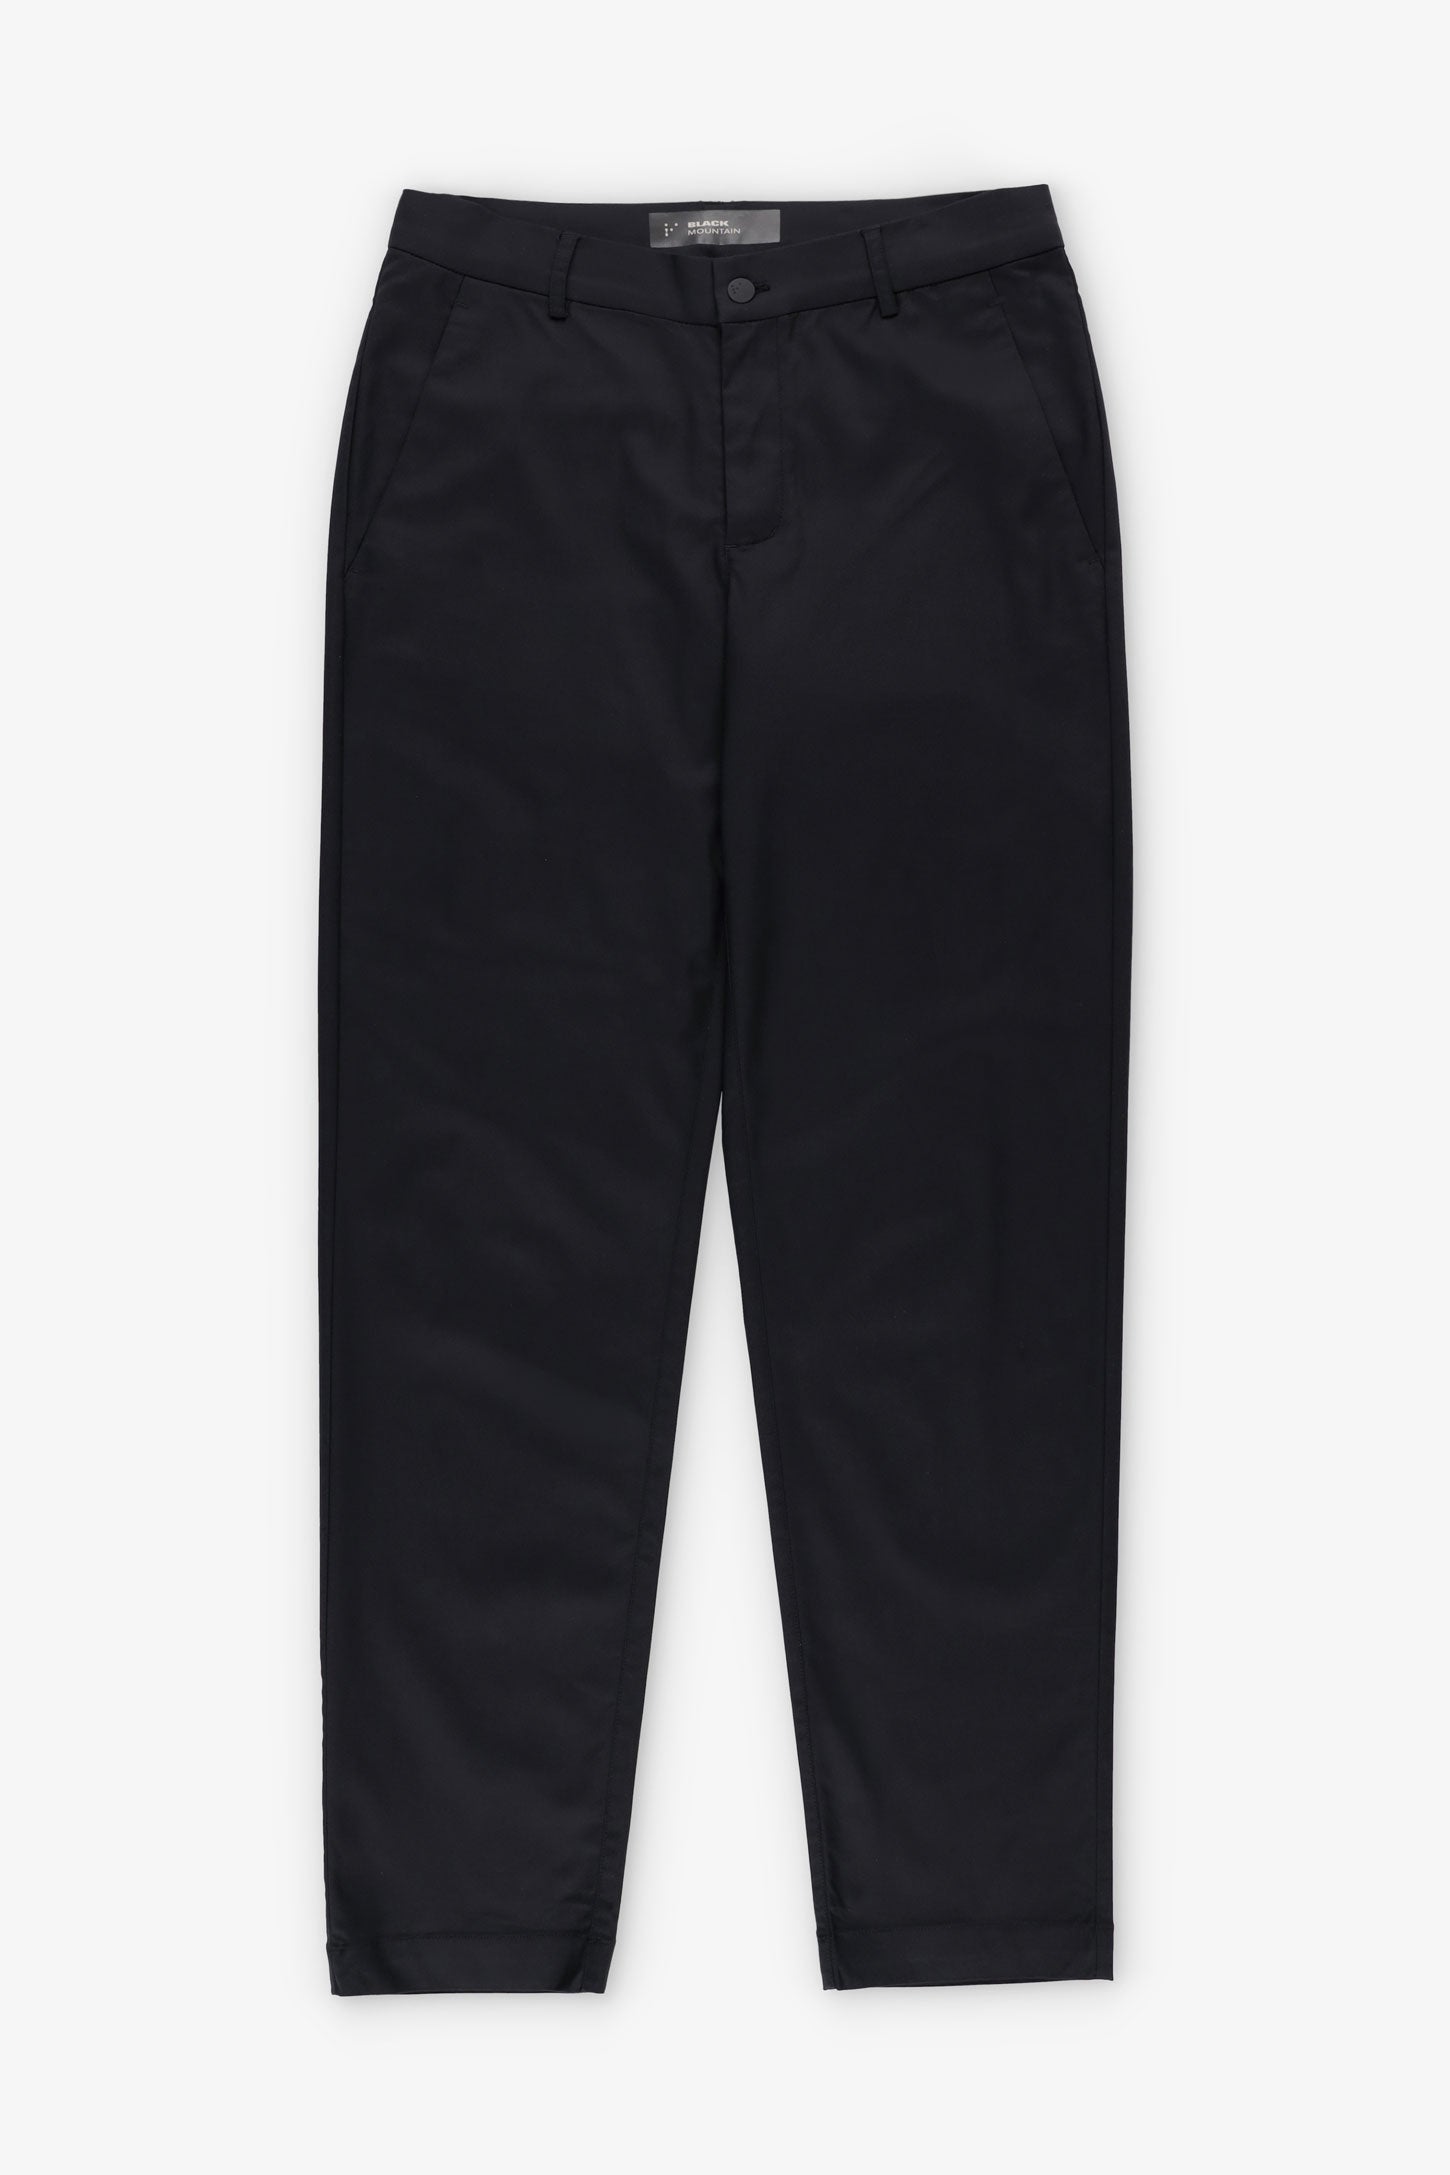 Black Mountain Trousers